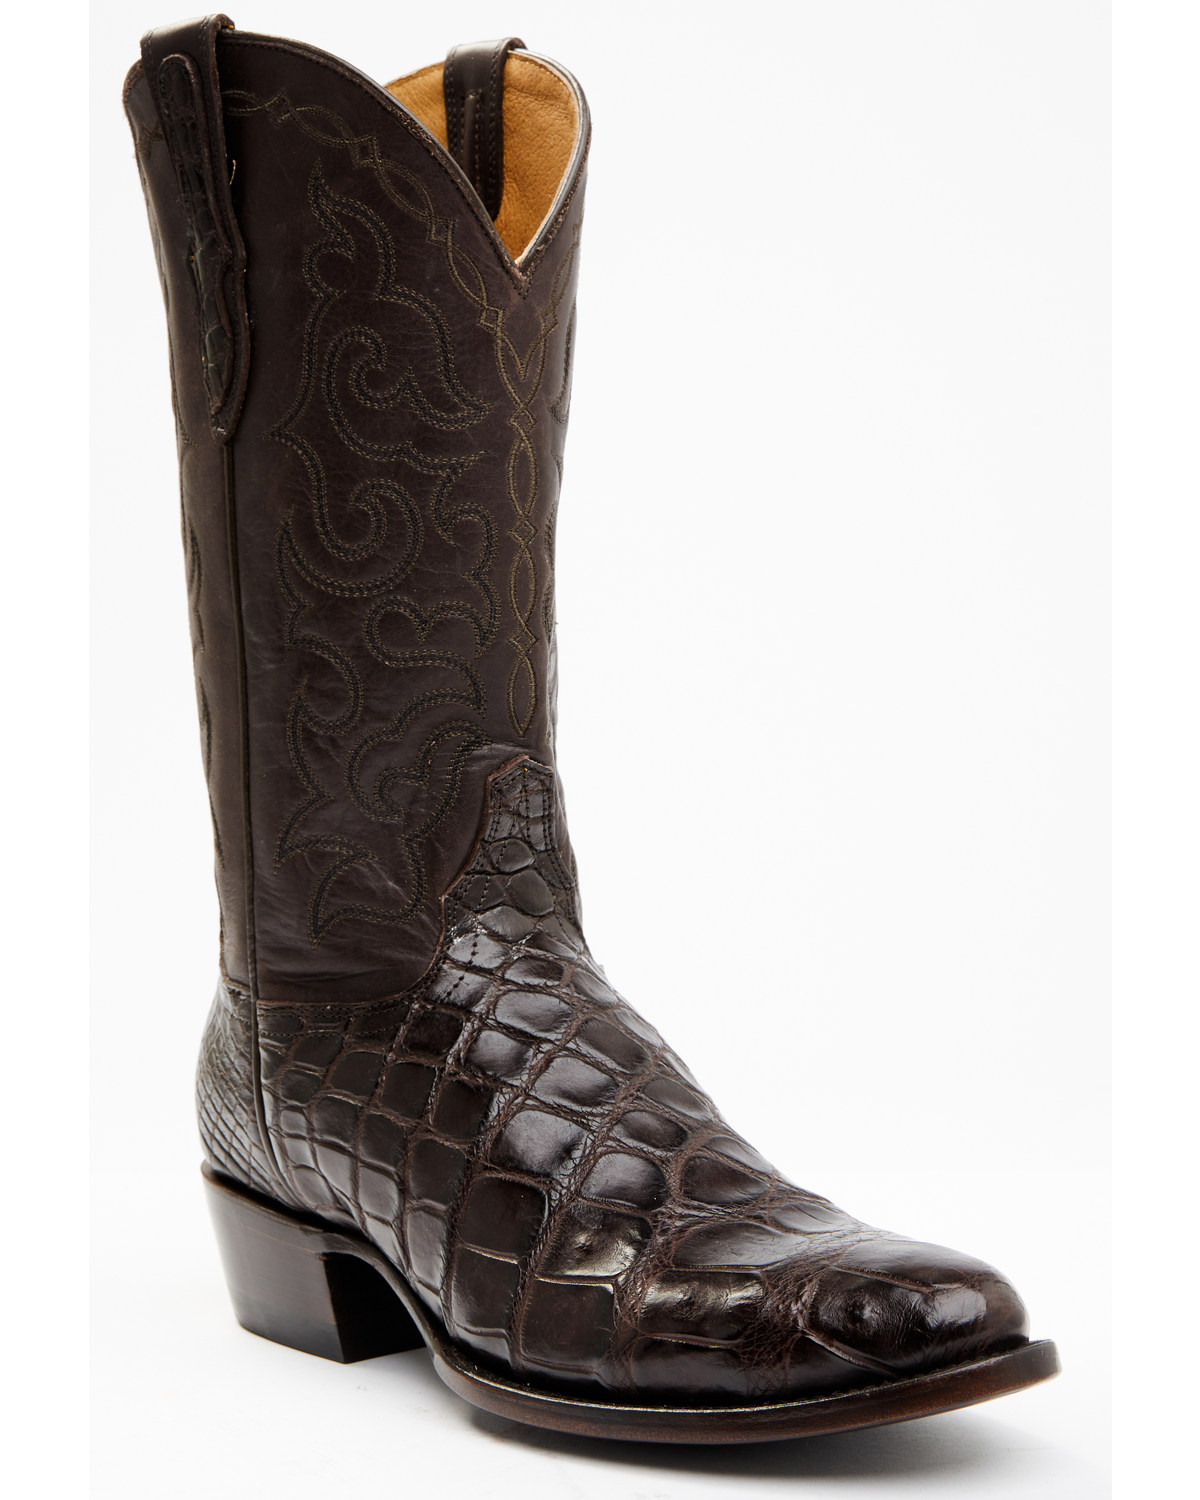 Cody James Men's Exotic American Alligator Western Boots - Medium Toe